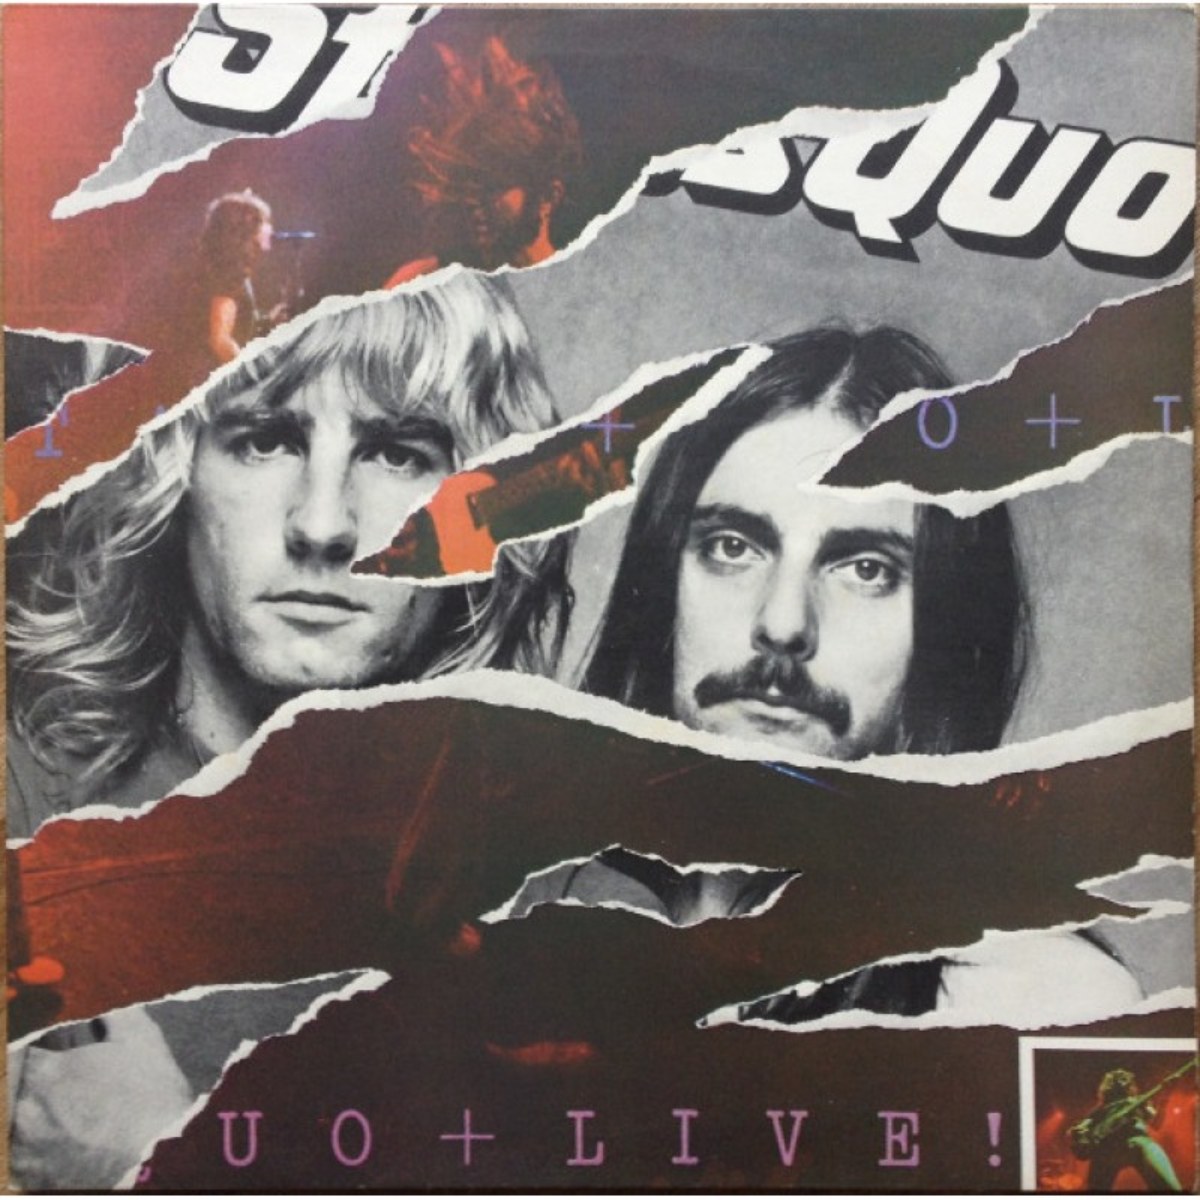 Status Quo - Ao vivo! (1977)